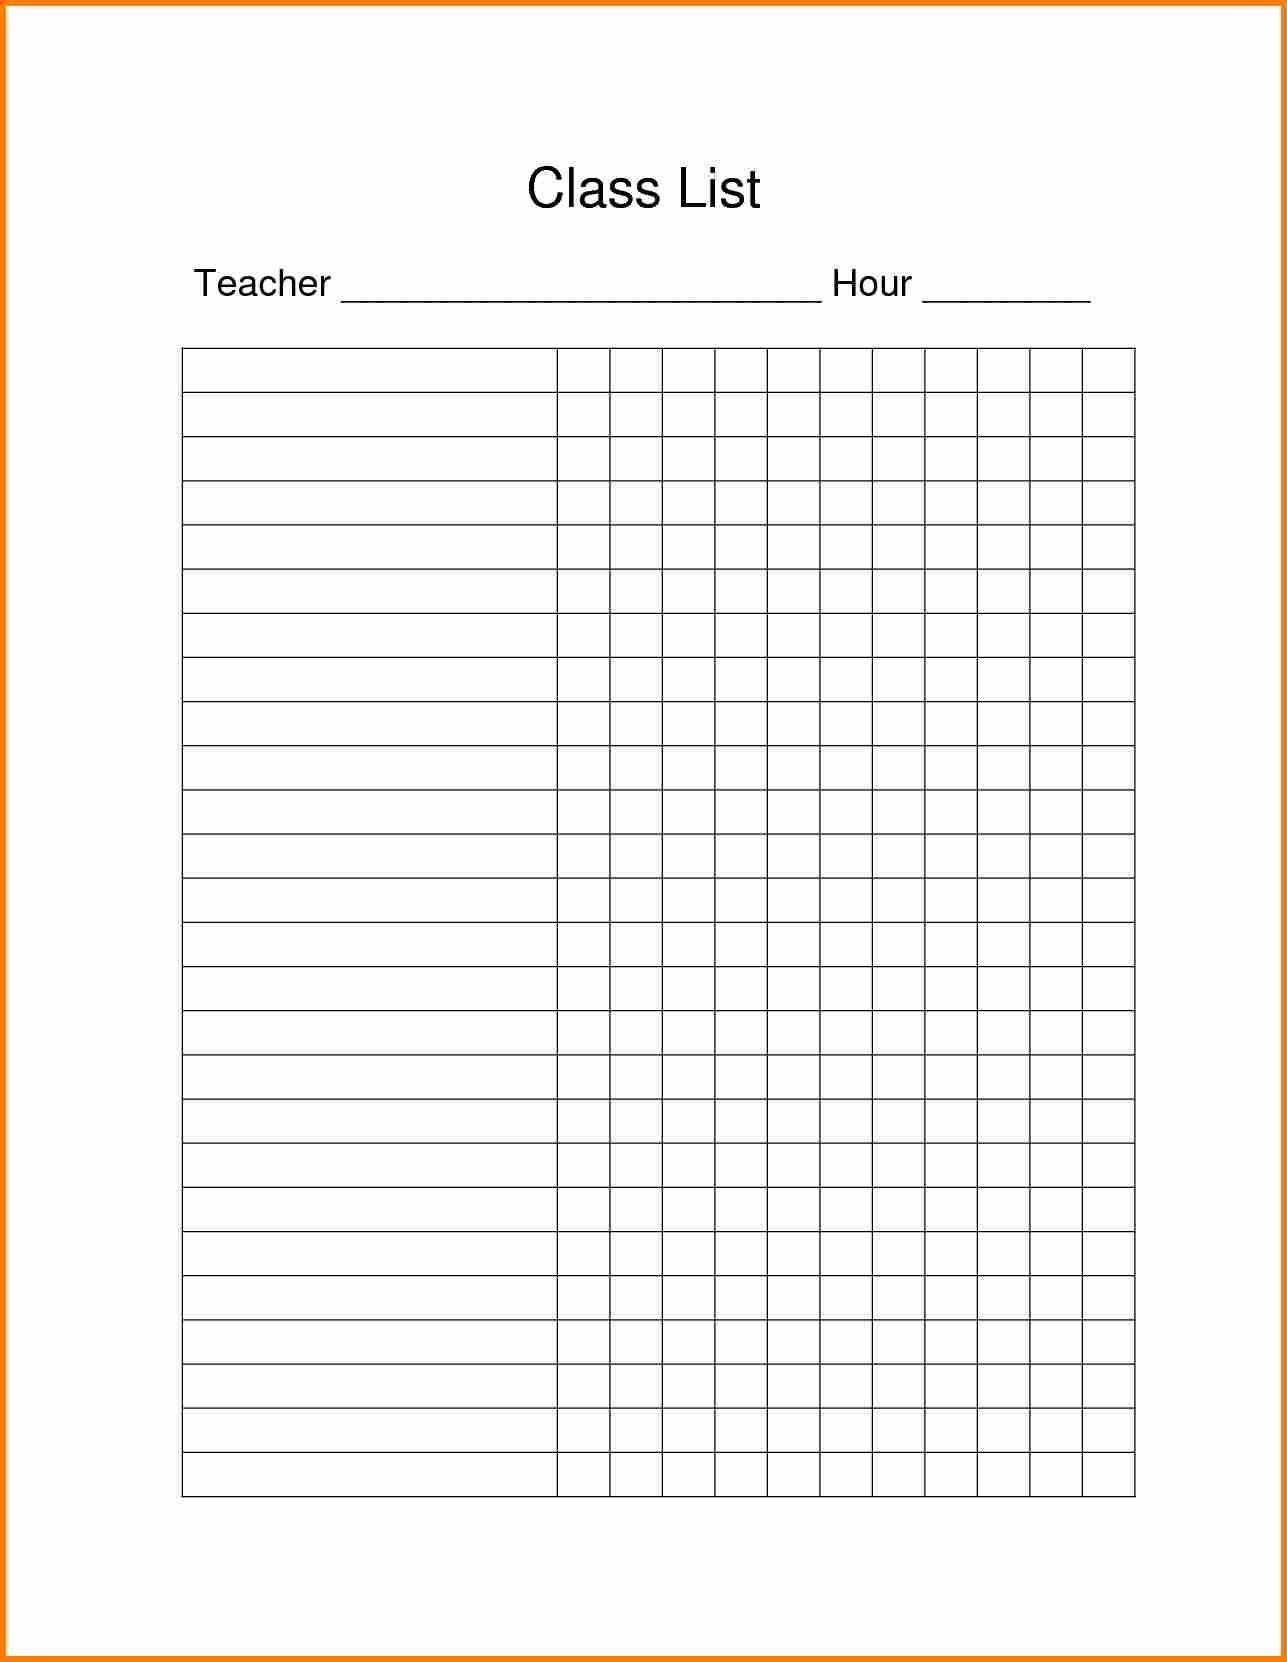 Class Job List Template Archives - Mavensocial.co New Class List - Free Printable Class List Template For Teachers